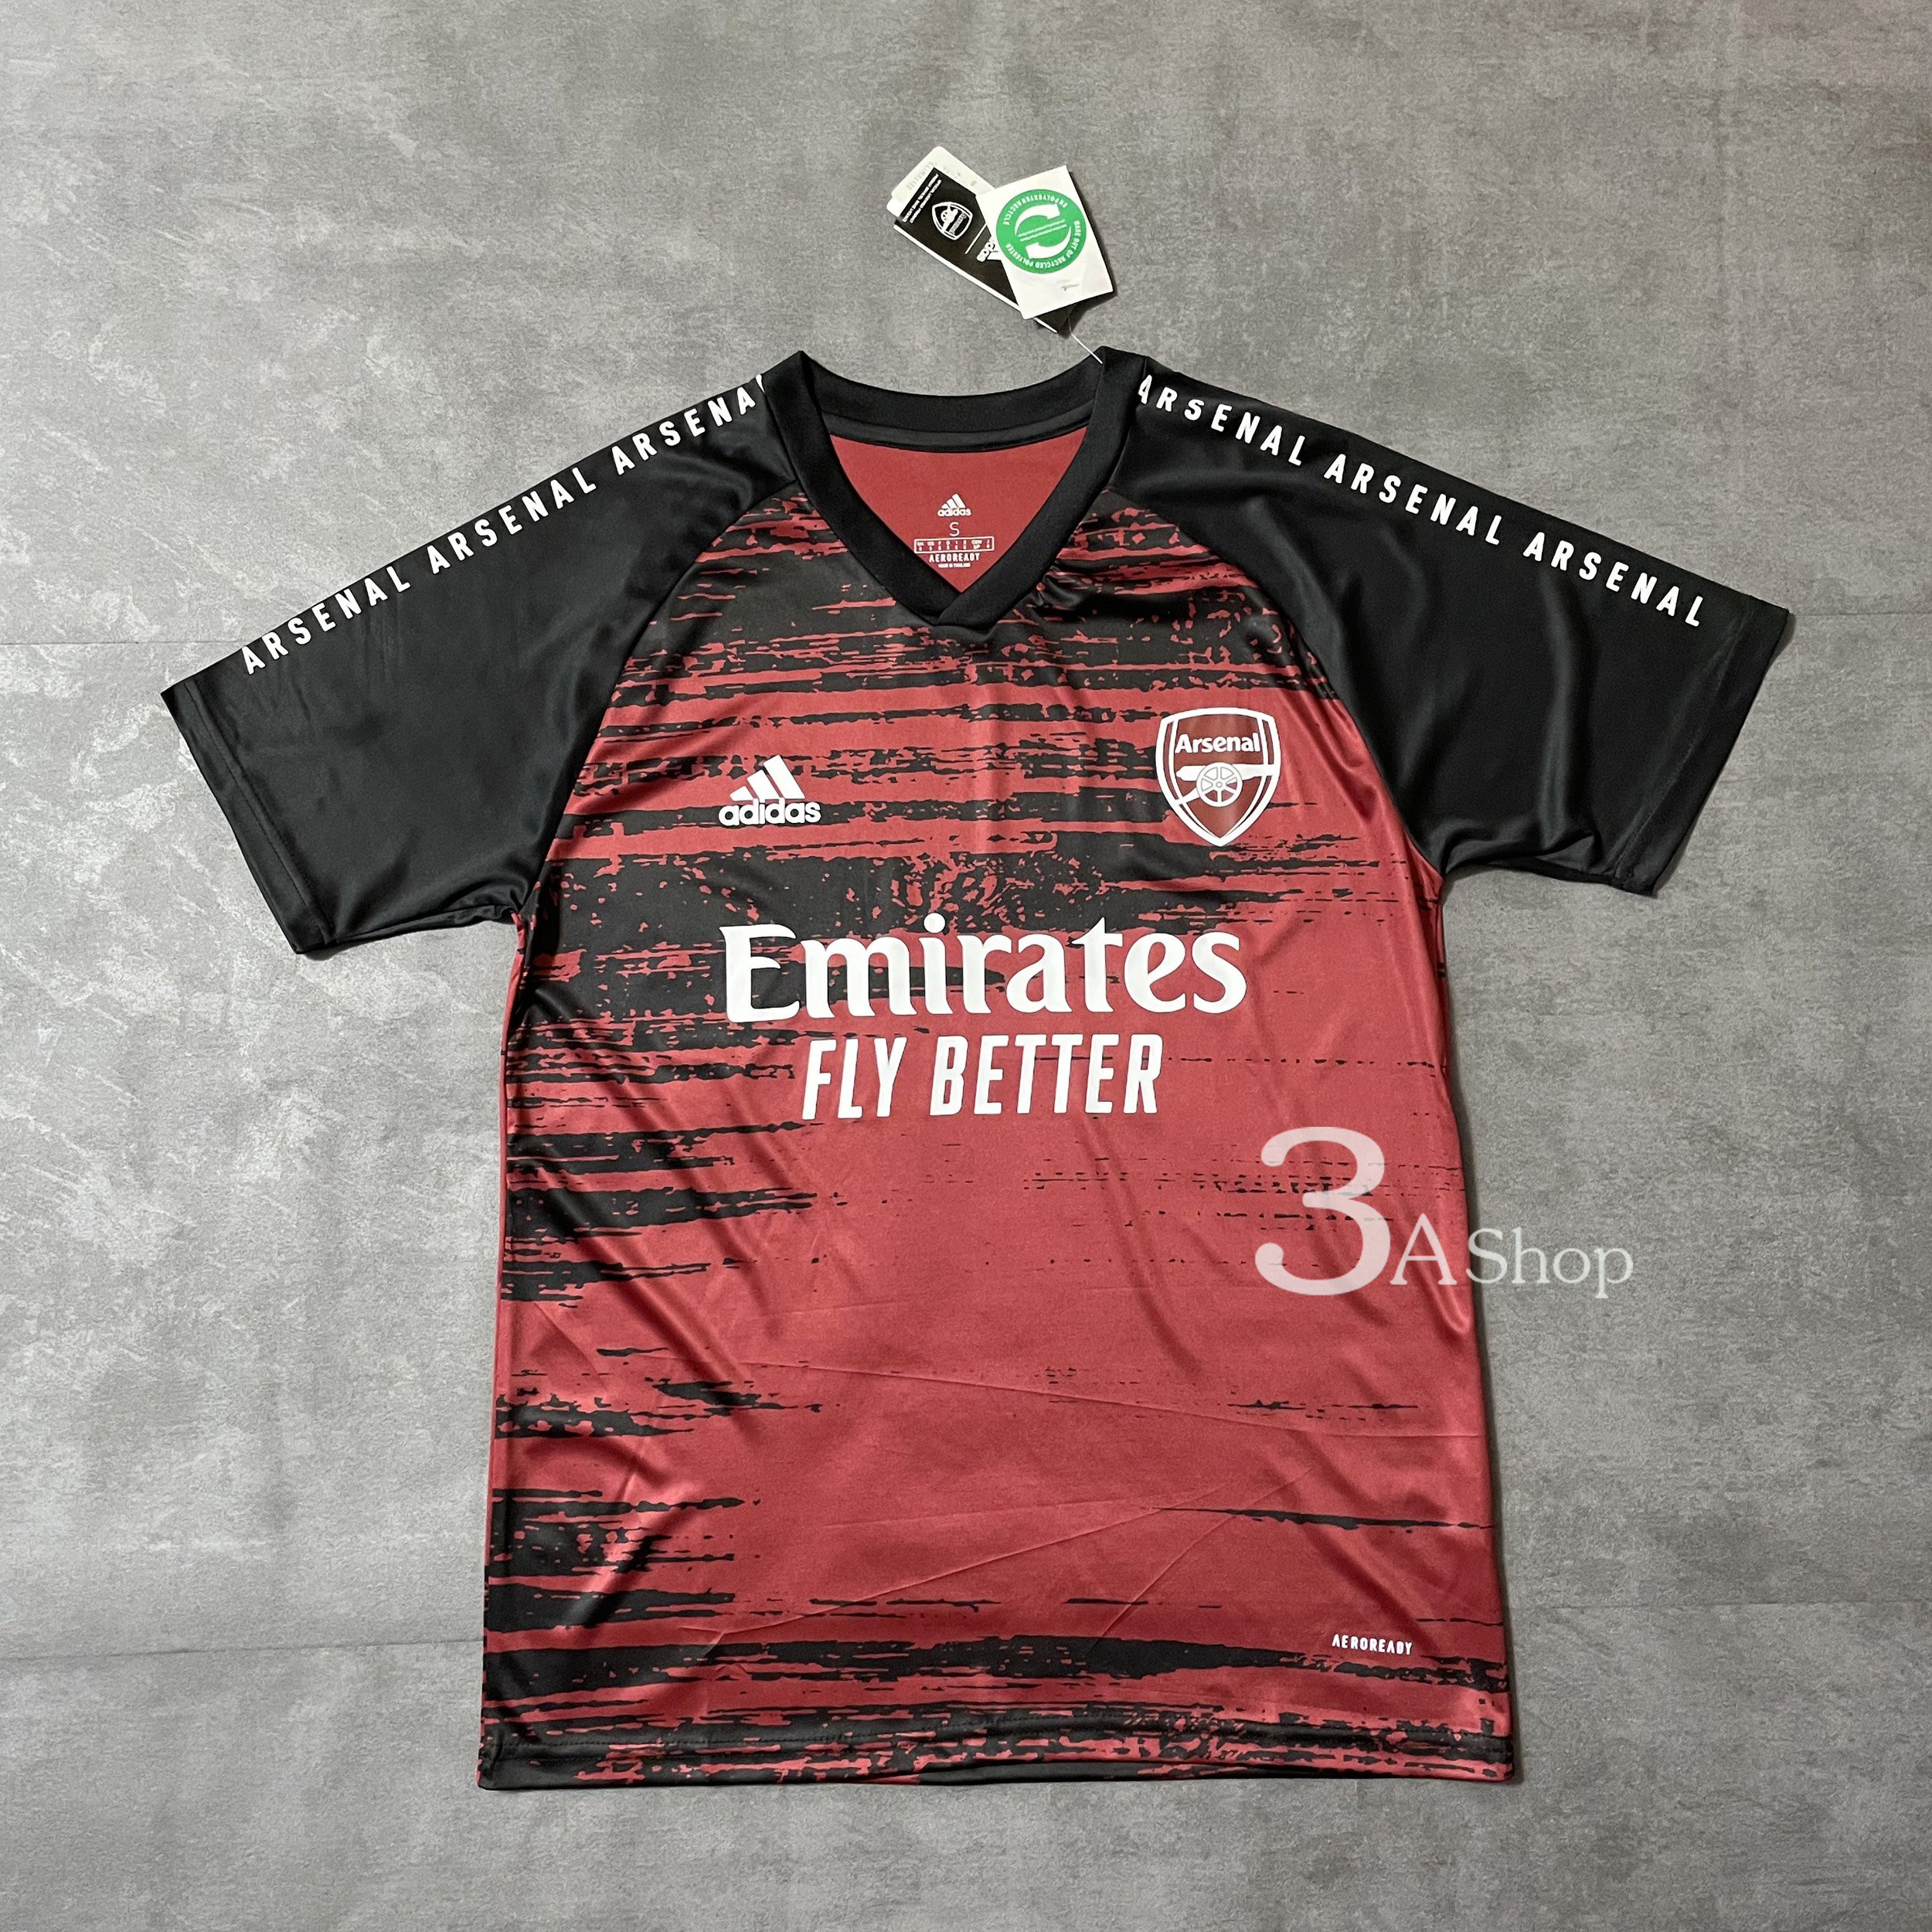 Arsenal Training 2020/2021 Black+ Red FOOTBALL SHIRT SOCCER JERSEY เสื้อบอล เสื้อฟุตบอล อาร์เซนอล เสื้อฝึกซ้อมสีดำแดง งานคุณภาพ ผ้านุ่ม ใส่สบาย เกรด AAA